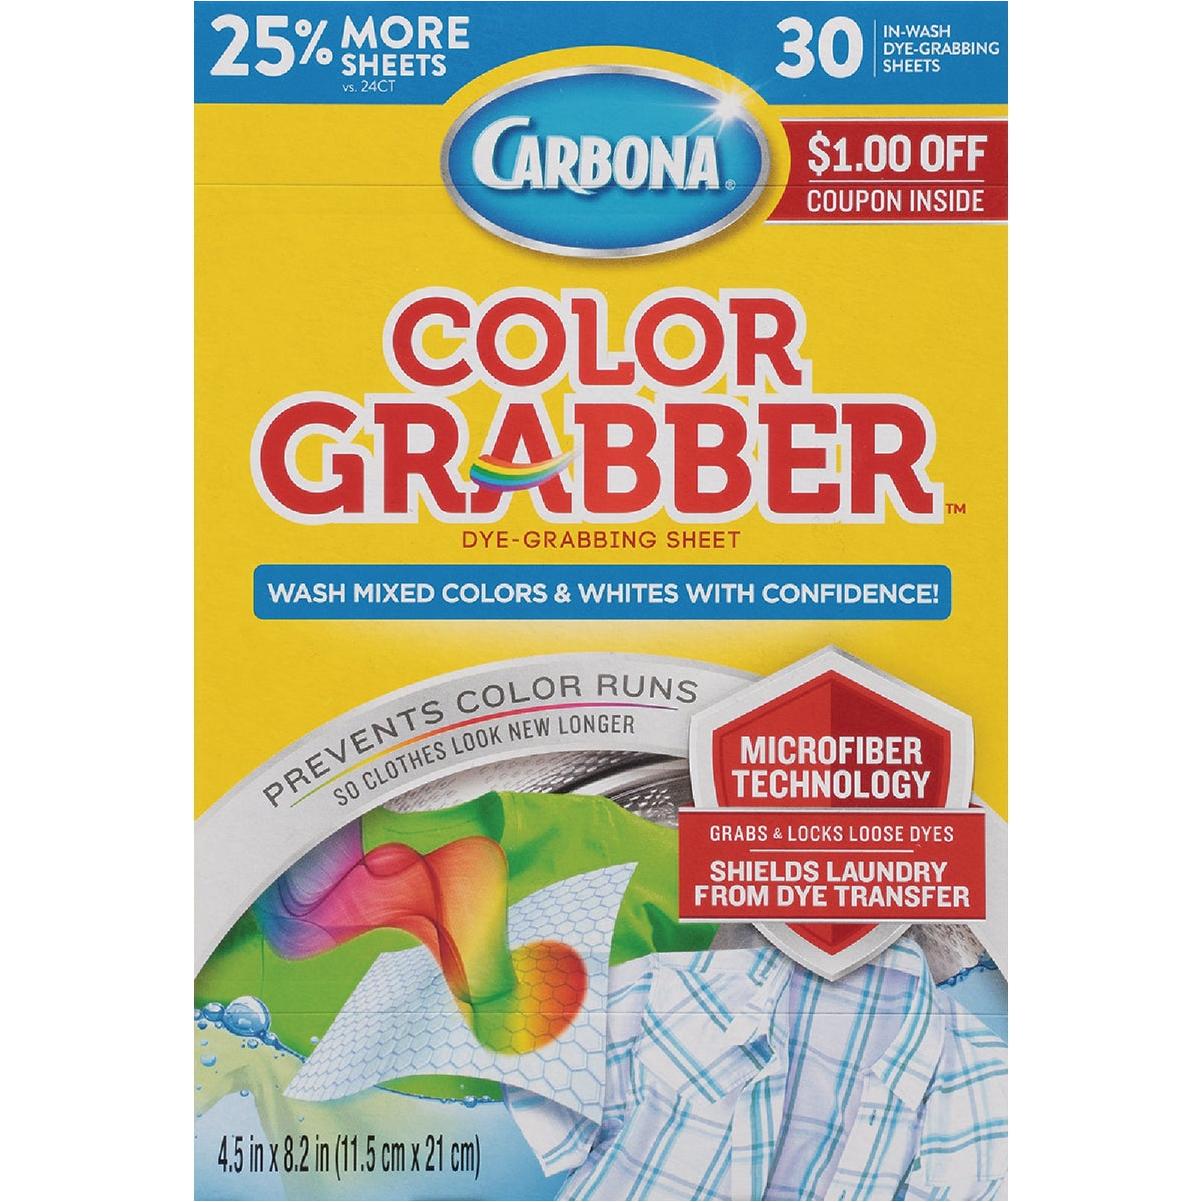 Carbona Color Grabber Microfiber Disposable Dye-Grabbing Sheets (30-Count)